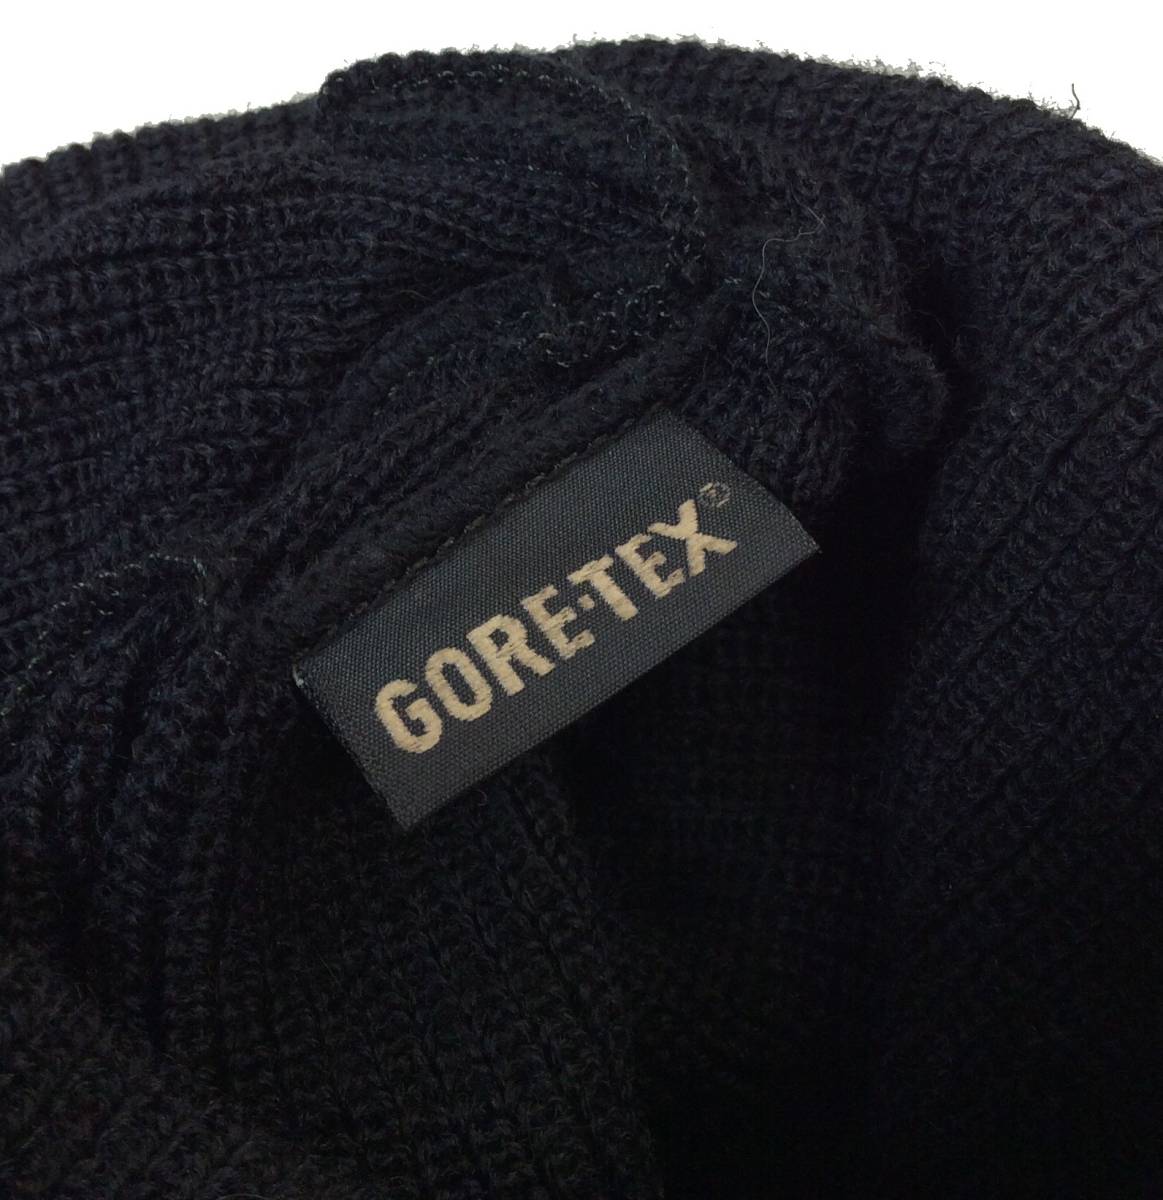 MIN-NANOmin nano GORE-TEX Gore-Tex knit cap knitted cap hat black black postage 250 jpy 